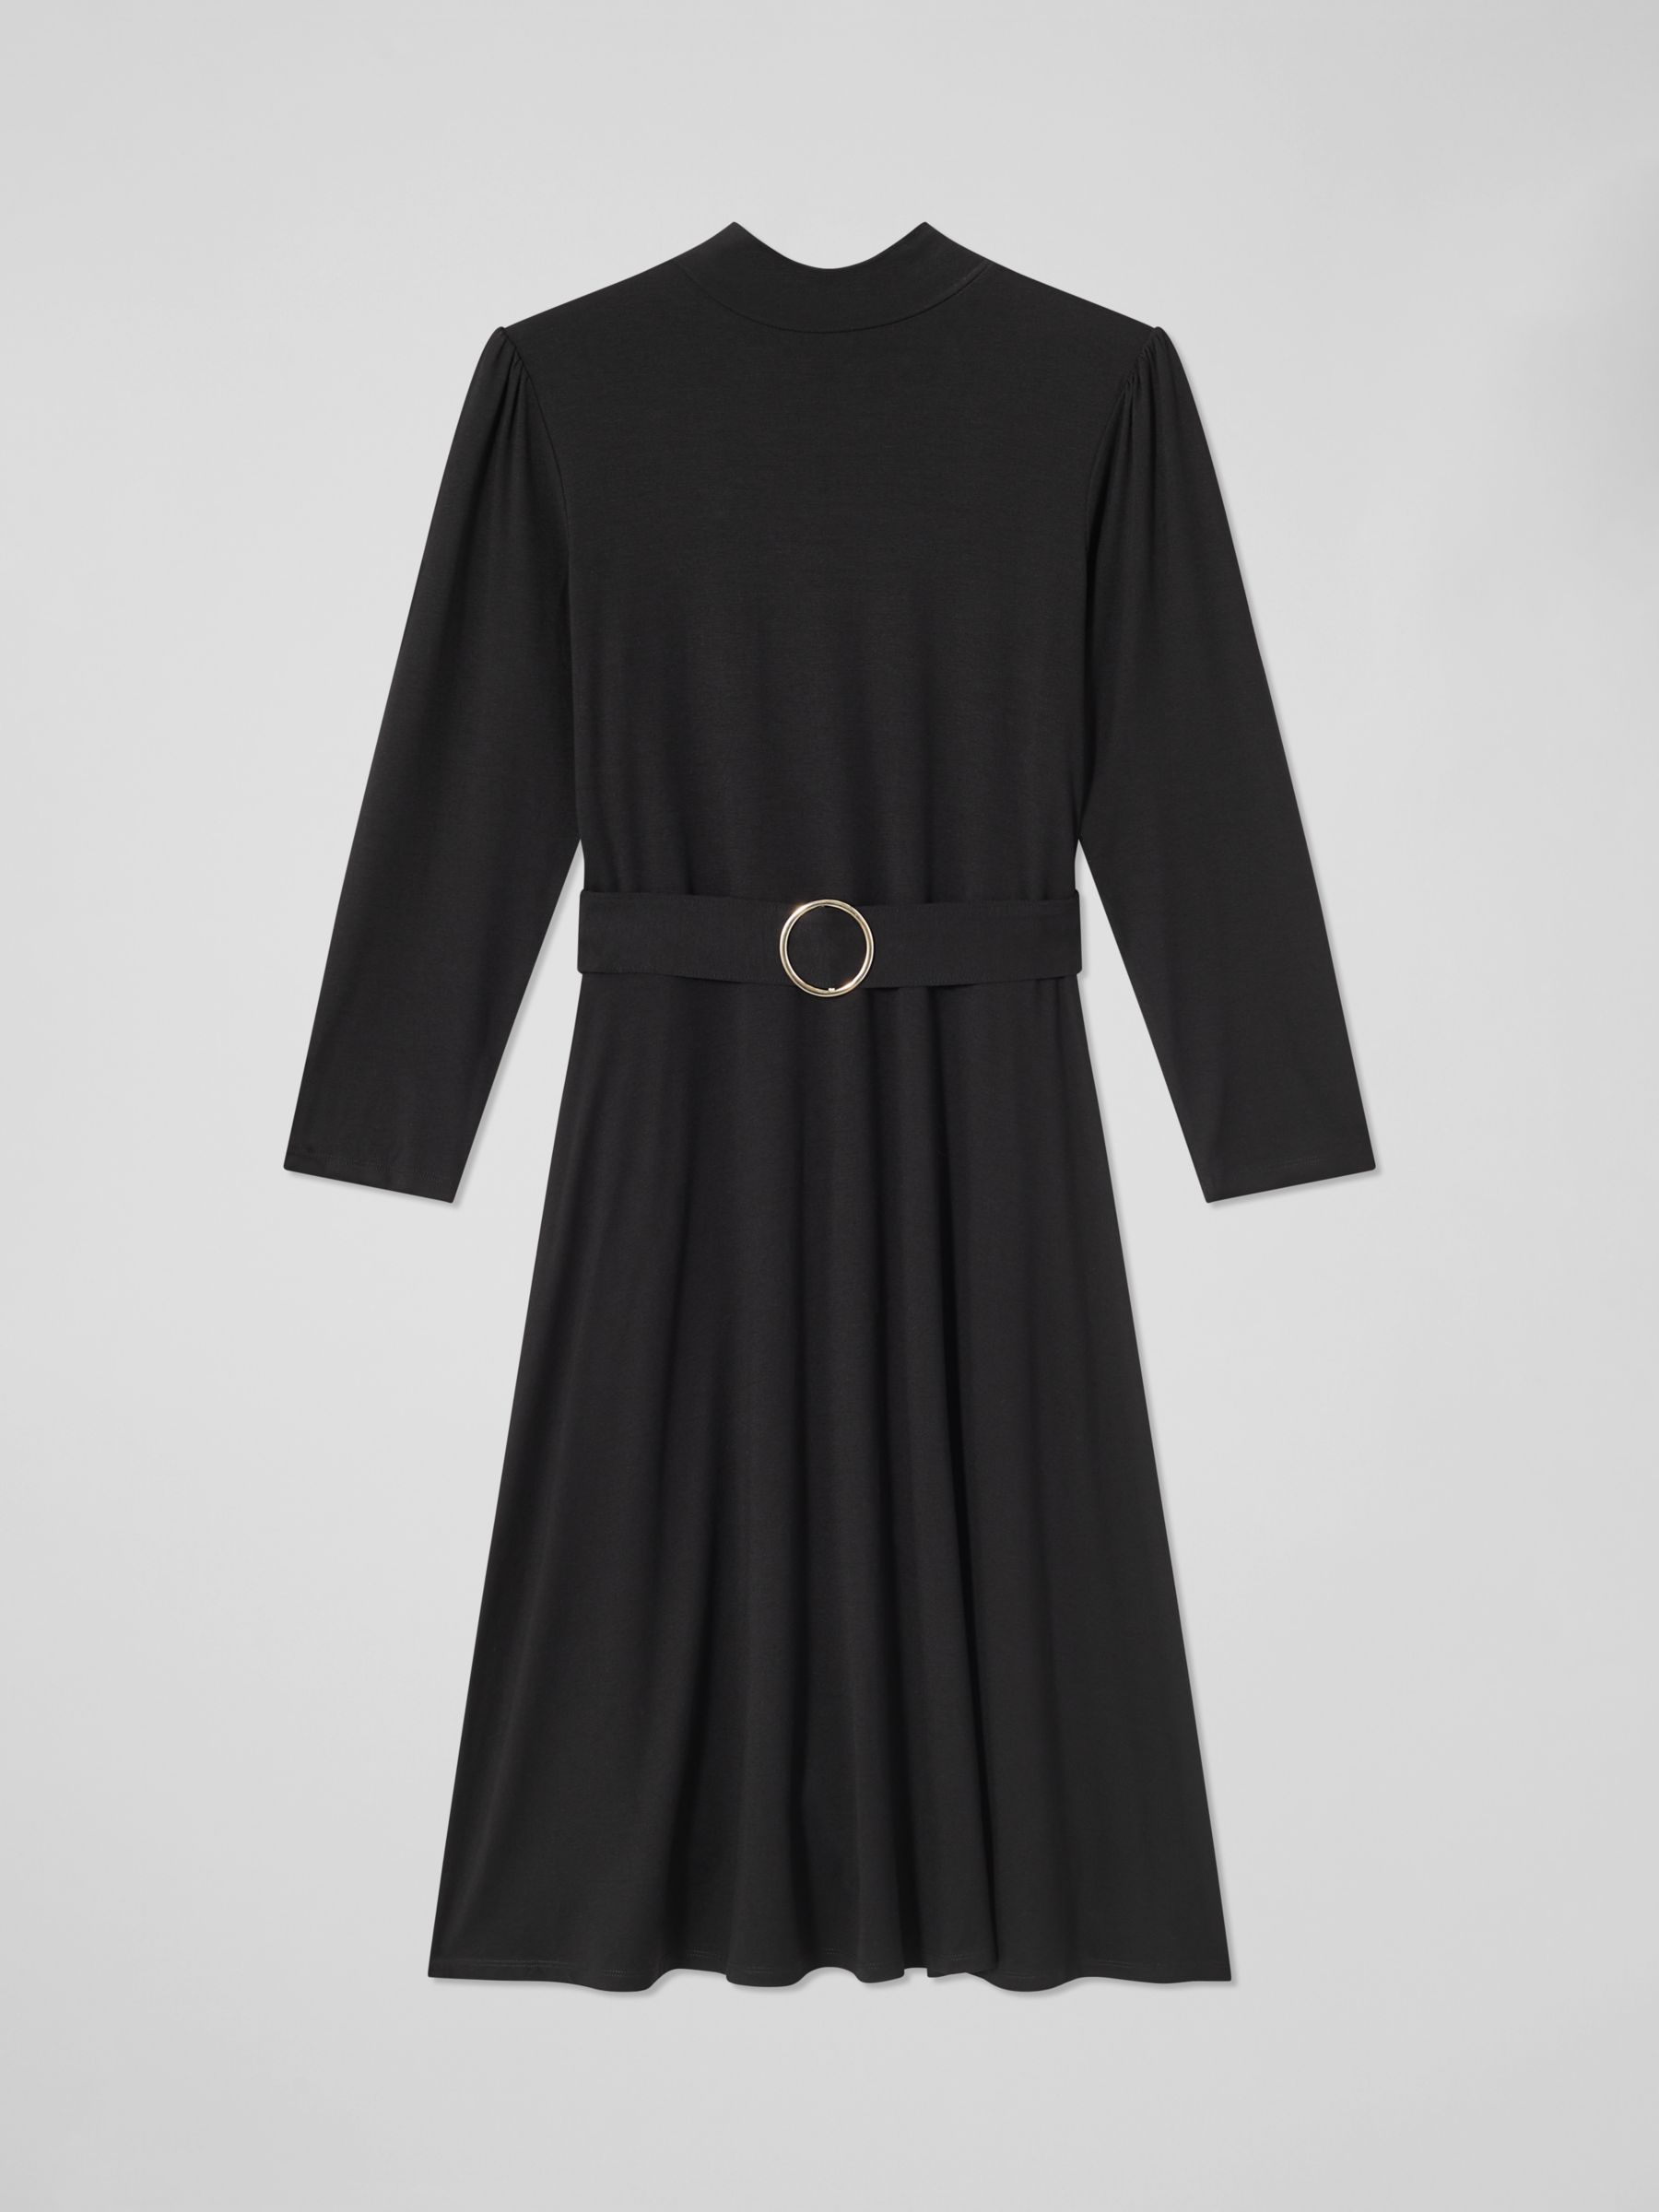 L.K.Bennett Florrie High Neck Belted Dress, Black at John Lewis & Partners